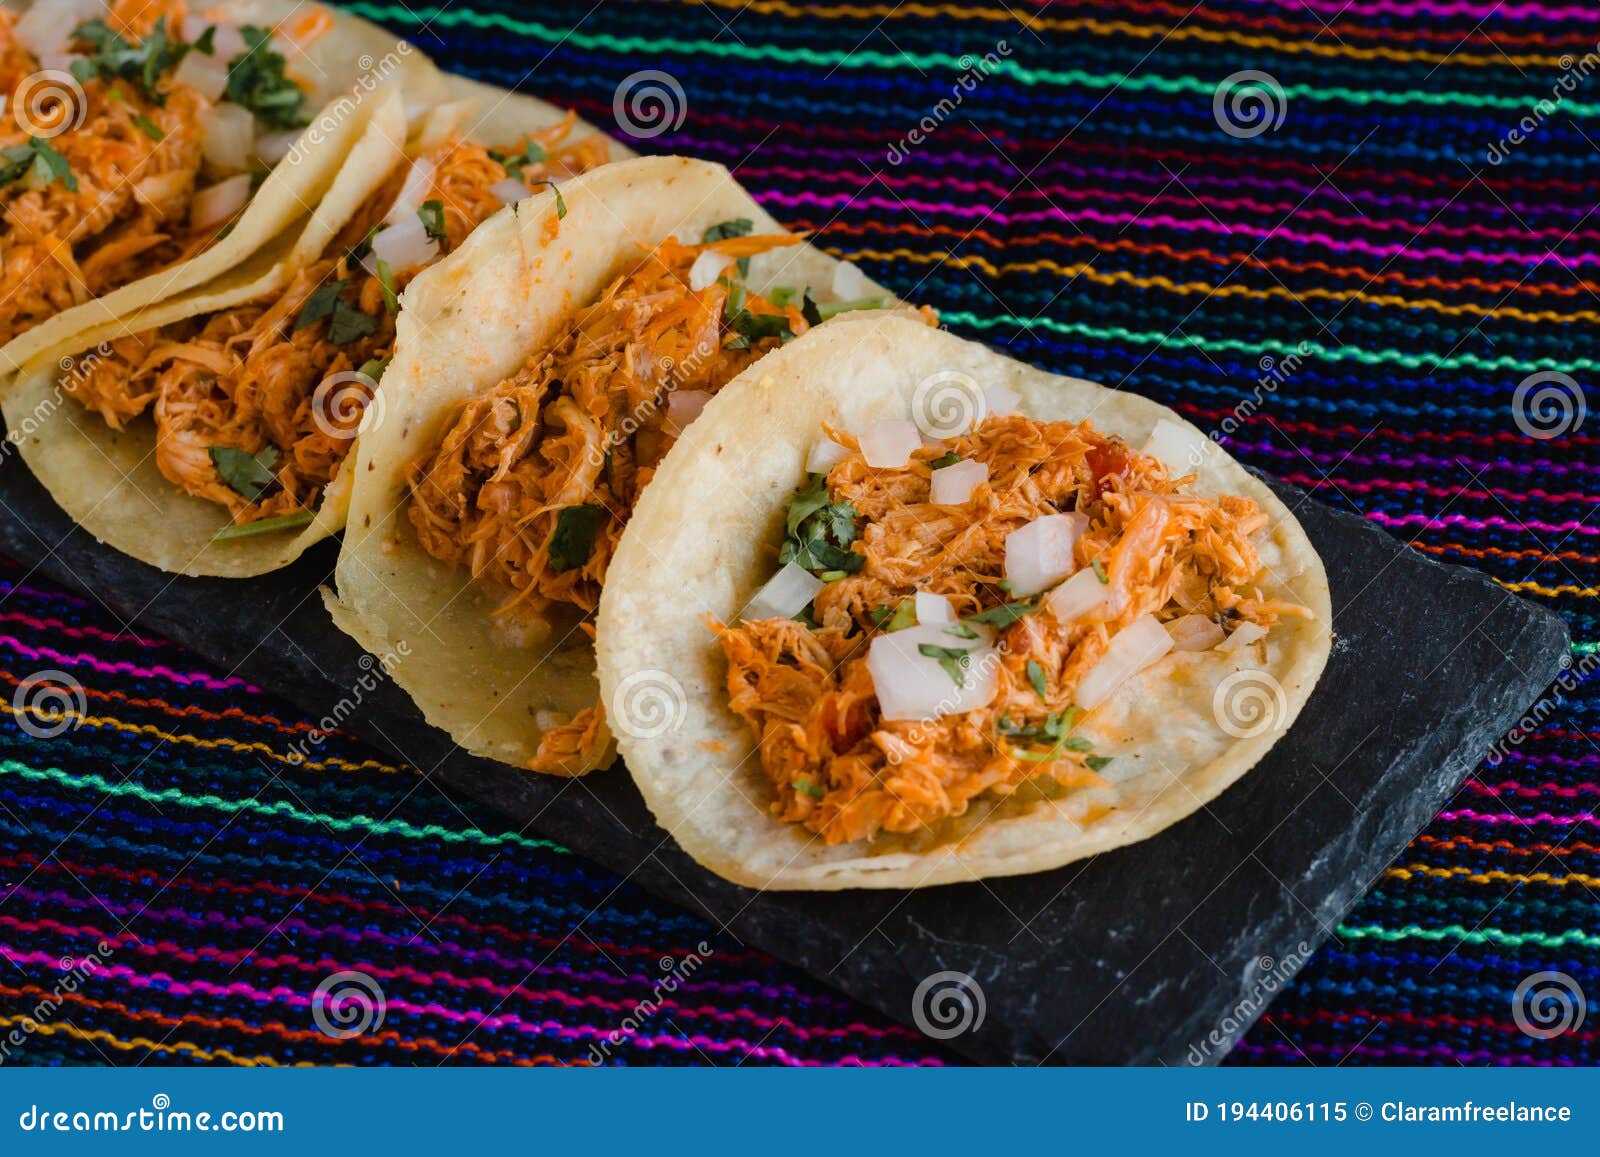 Tacos Mexicanos Llenos De Tinga De Pollo Sobre Un Fondo Textil Tradicional  Imagen de archivo - Imagen de comida, auténtico: 194406115